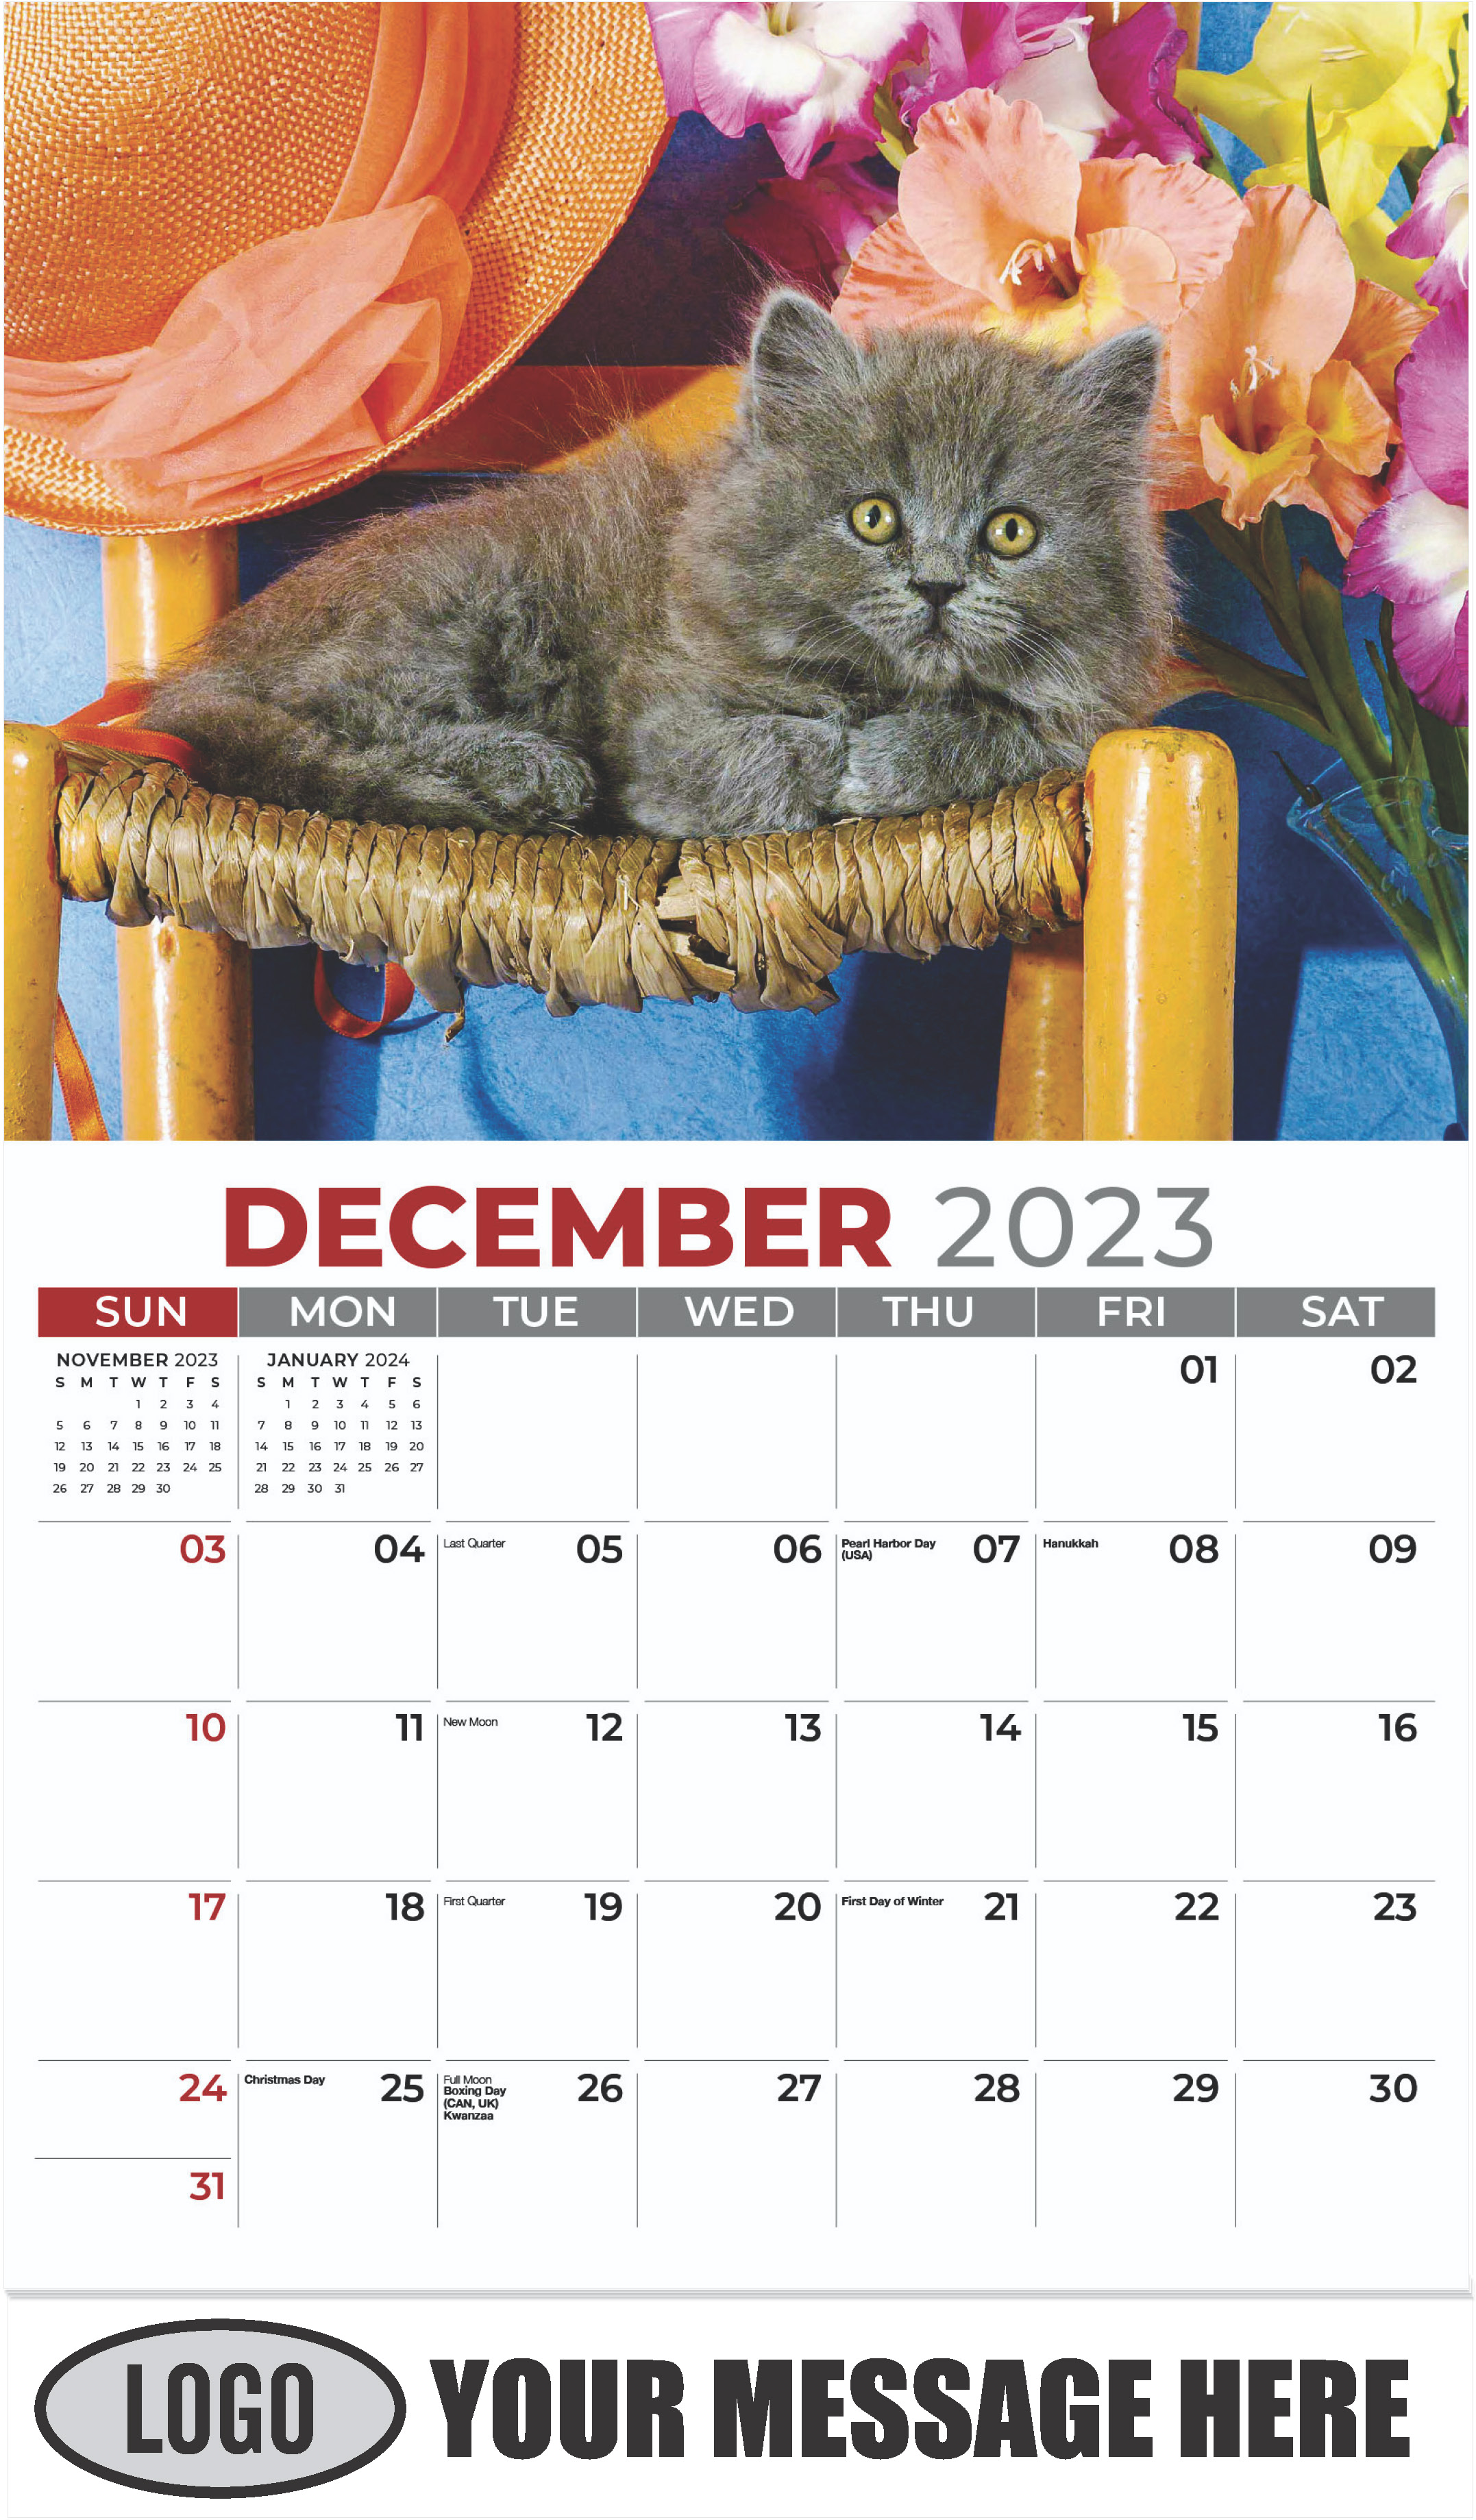 Persian Kitten - December 2023 - Kittens 2023 Promotional Calendar